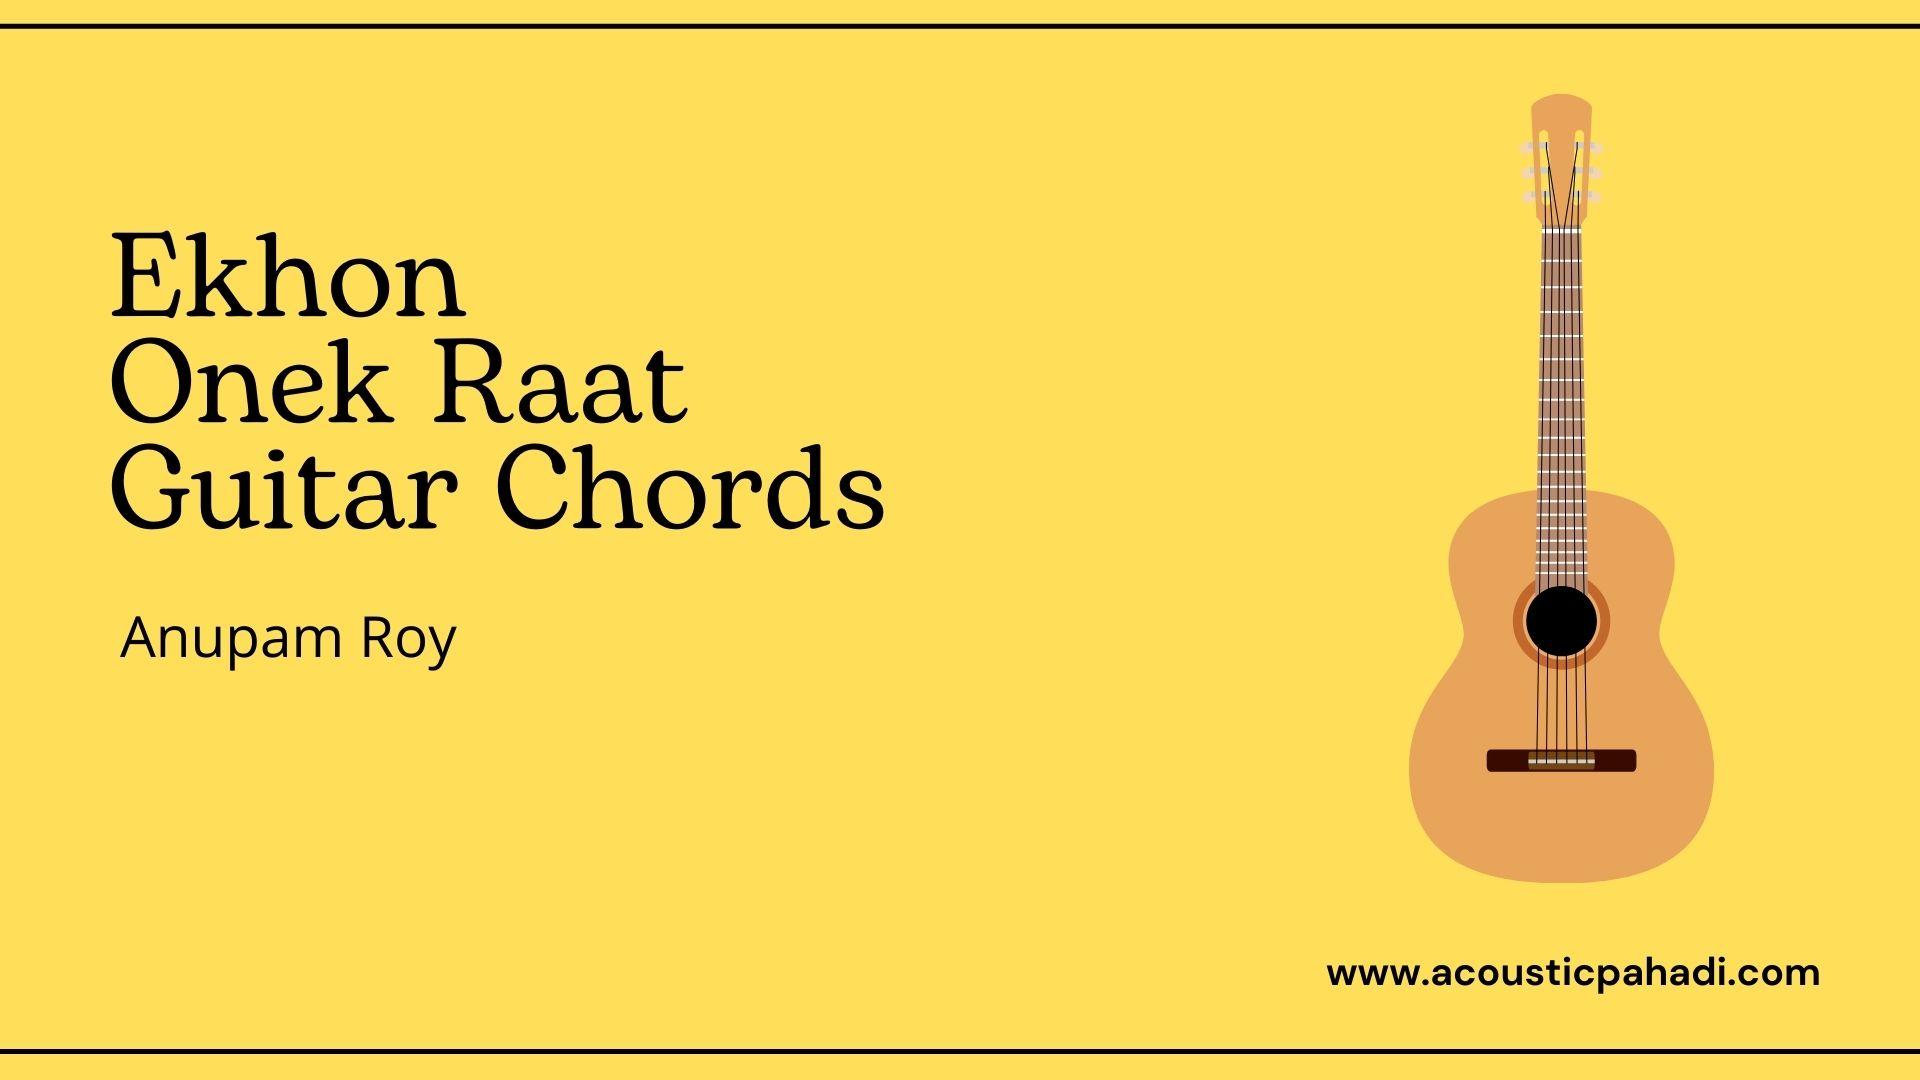 Ekhon onek raat guitar chords